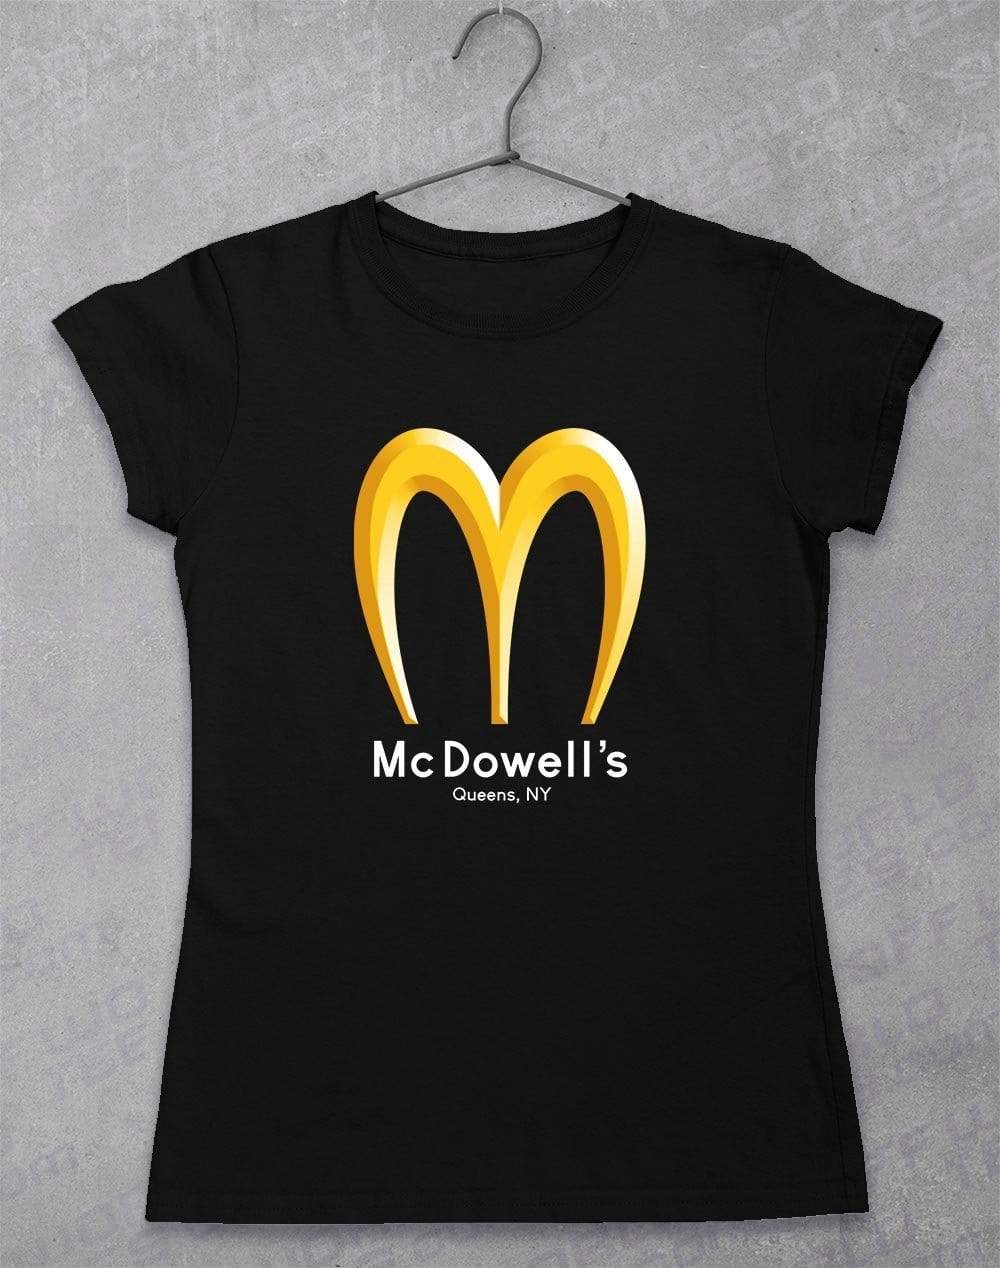 McDowells Women's T-Shirt 8-10 / Black  - Off World Tees